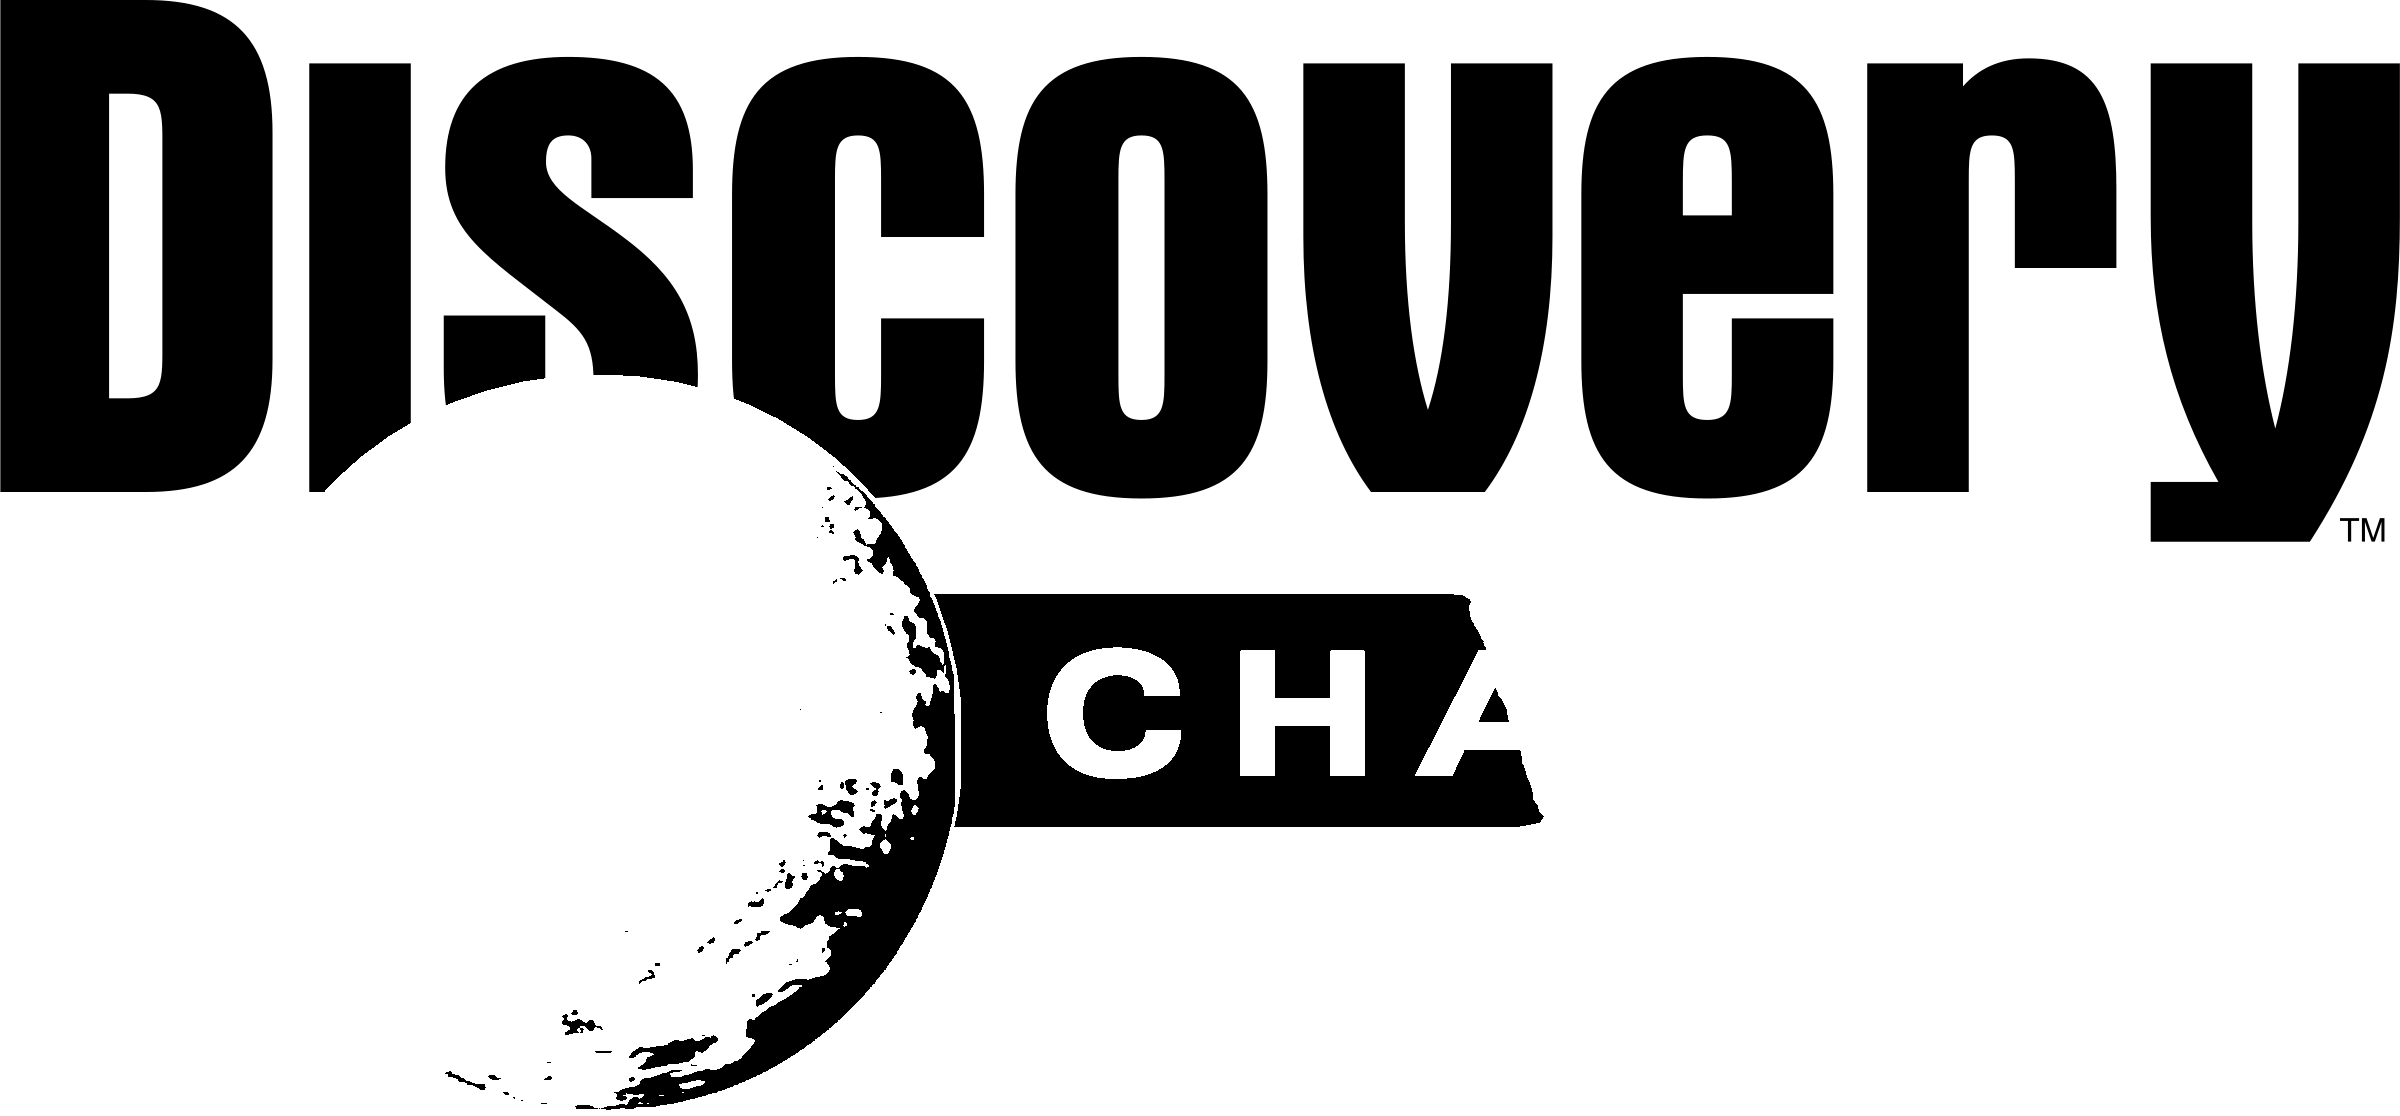 Discovery Channel Logo - Discovery Channel Logo PNG Transparent & SVG Vector